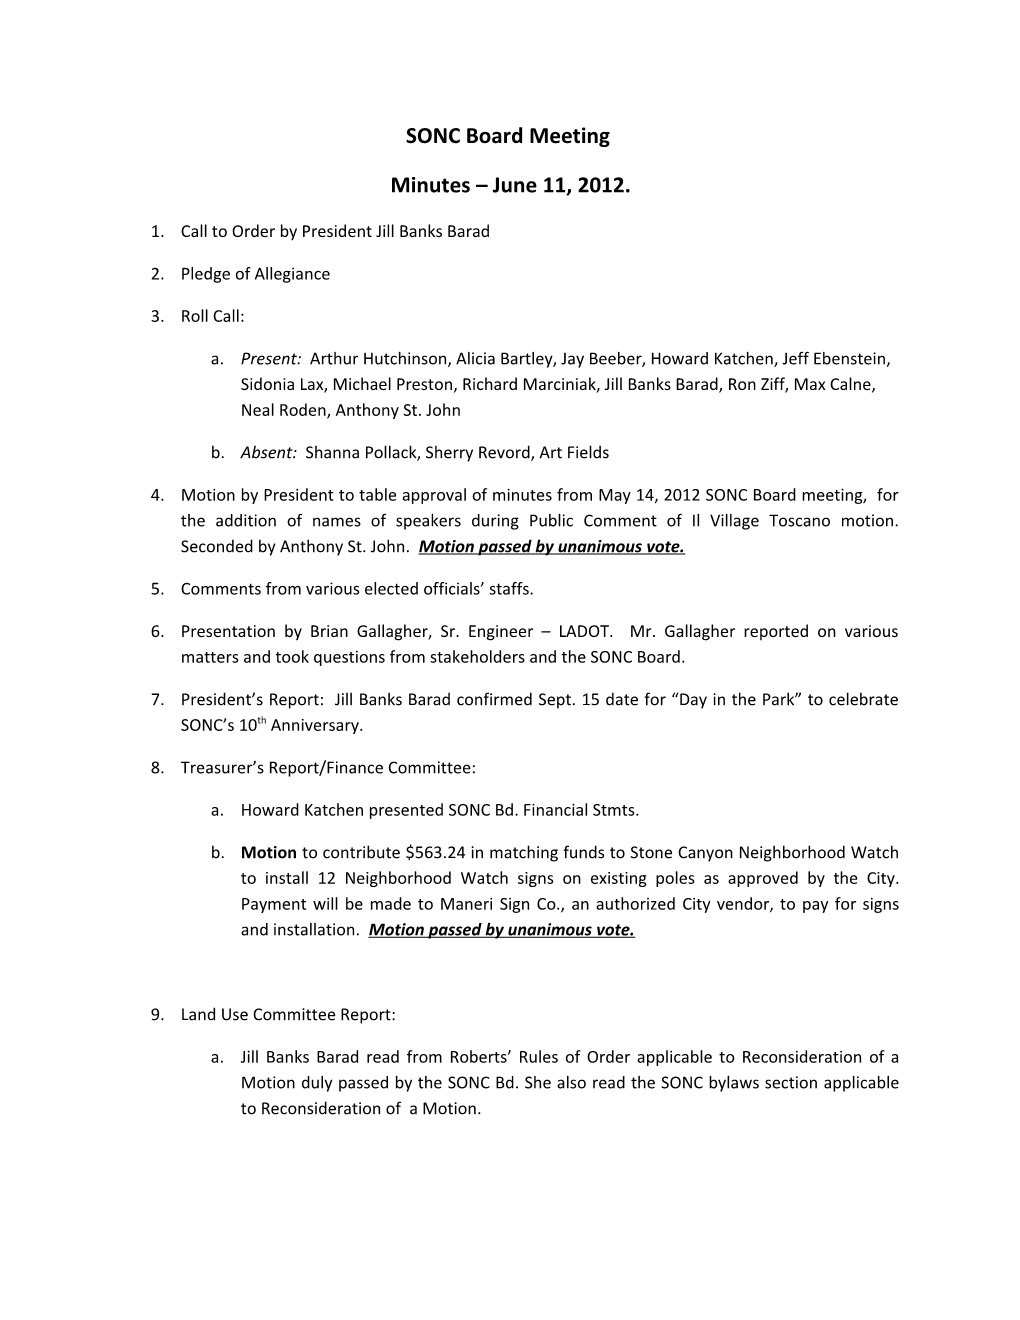 SONC Board Mtg Minutes June 11, 2012